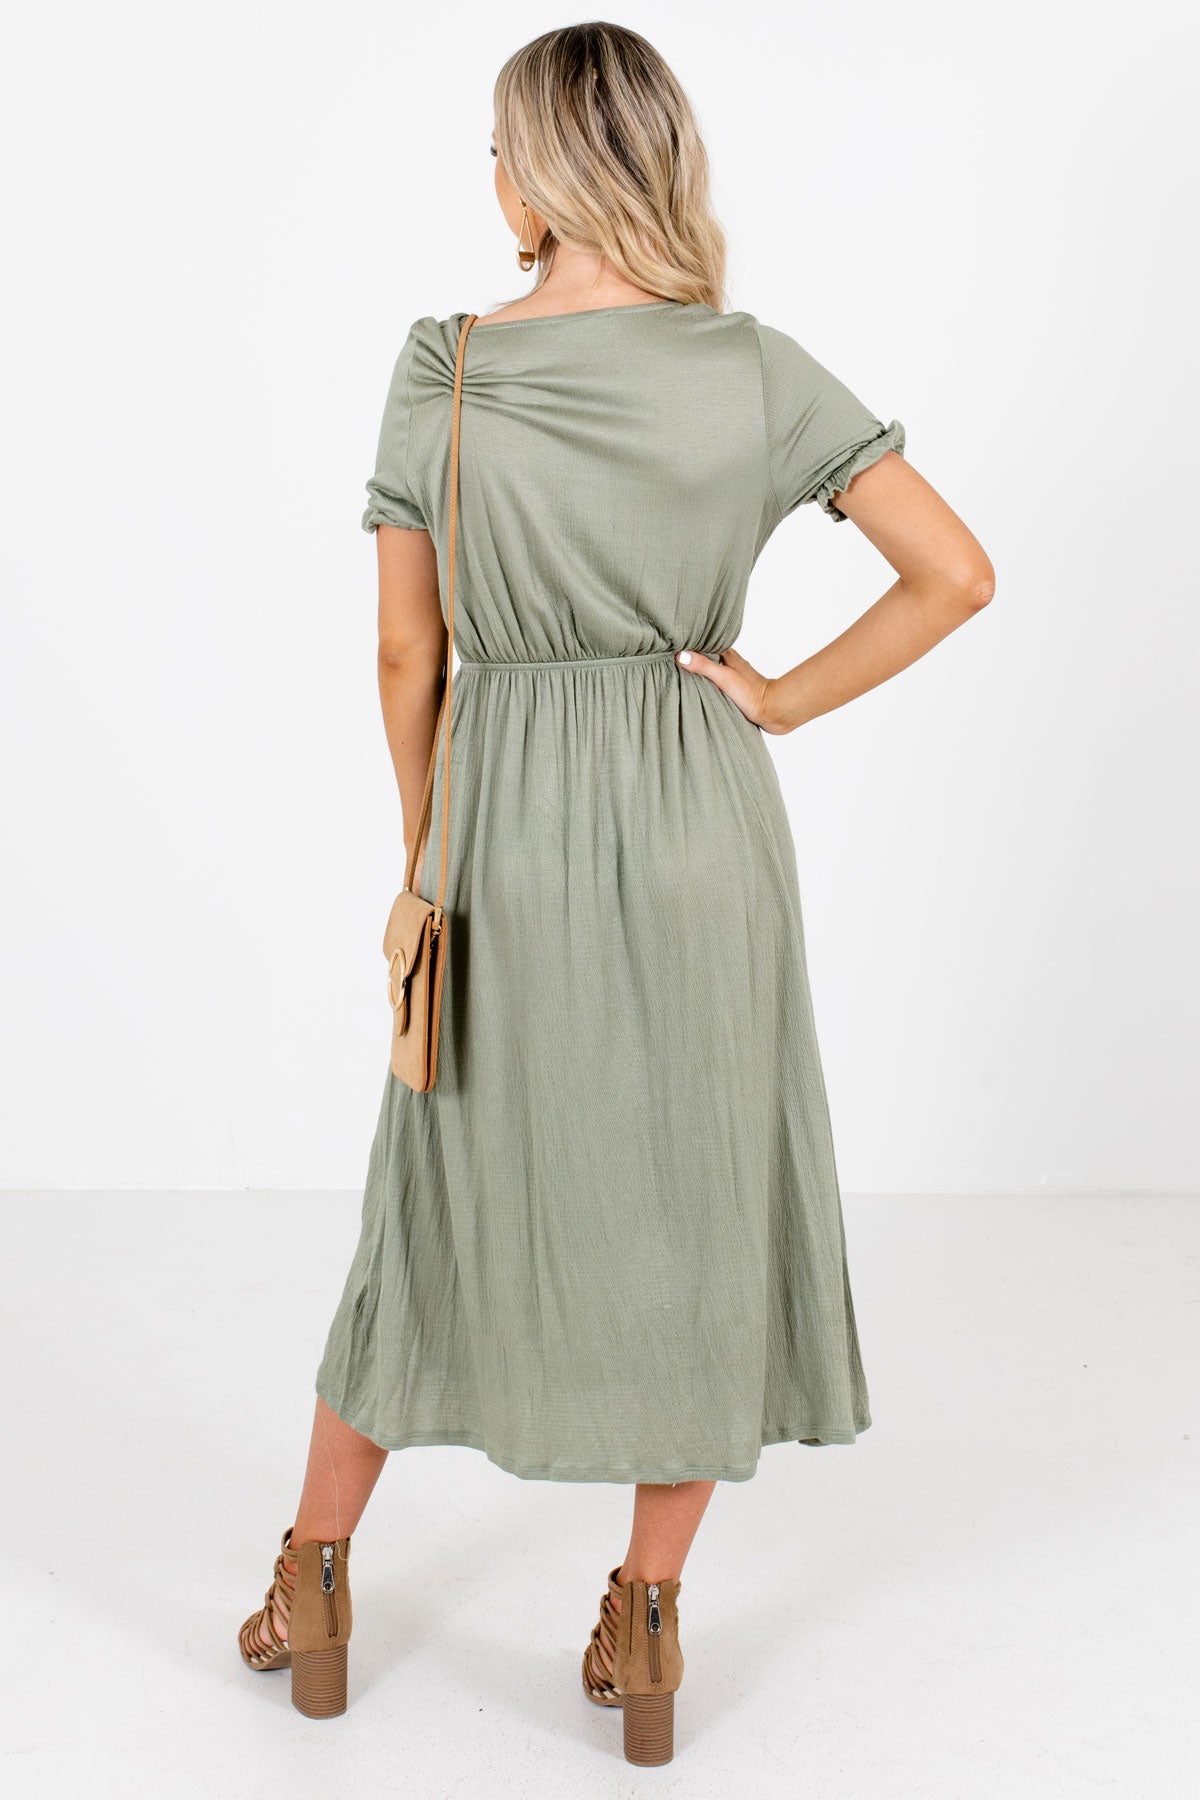 Women's Olive Green Elastic Waistband Boutique Midi Dress